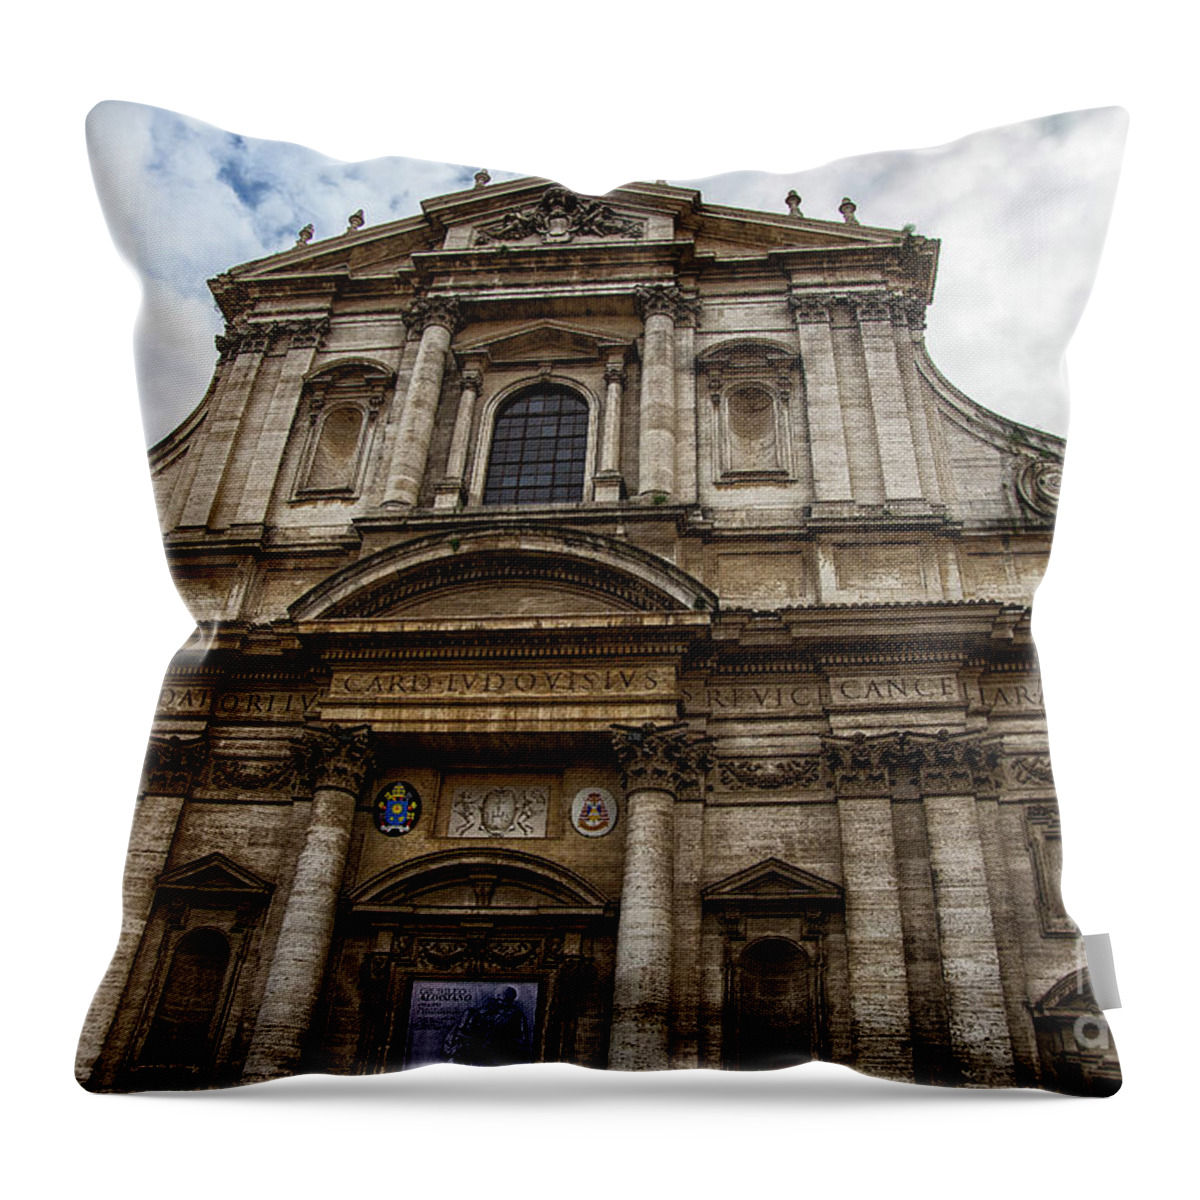 Wayne Moran Photography Throw Pillow featuring the photograph Church of St. Ignatius of Loyola at Campus Martius Rome Italy by Wayne Moran